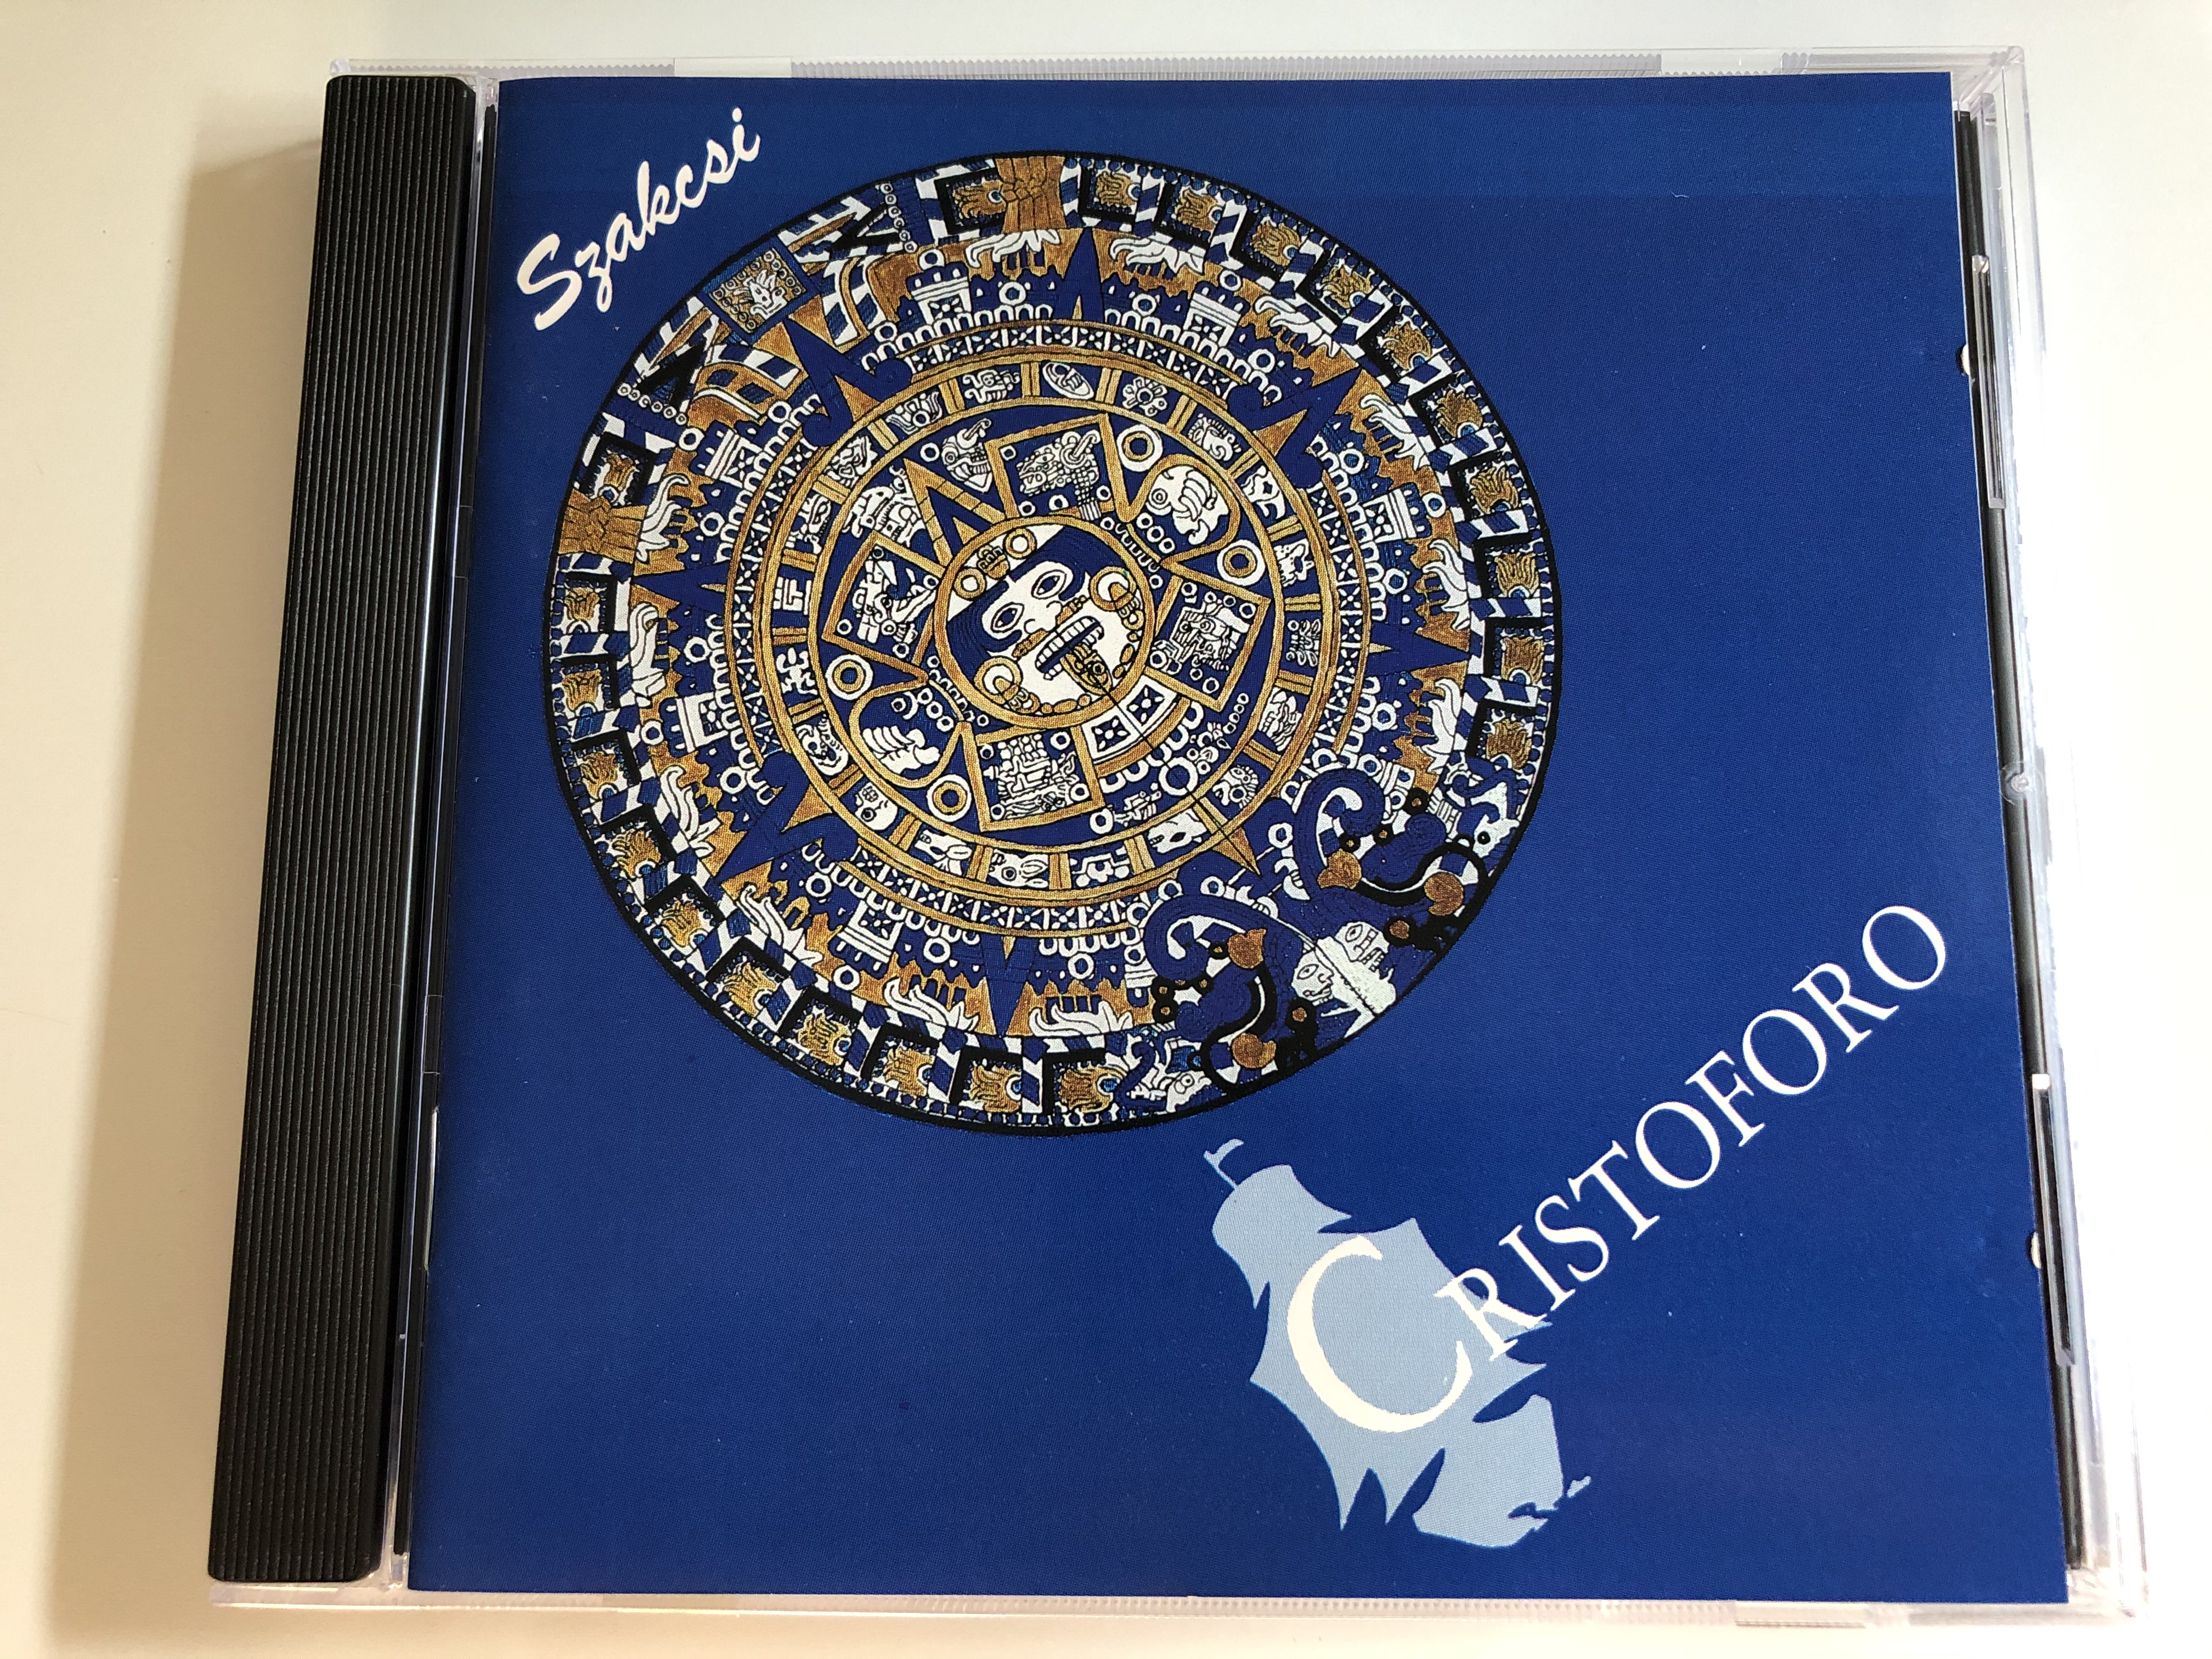 szakcsi-cristoforo-lobosound-audio-cd-1992-stereo-lscd-001-1-.jpg